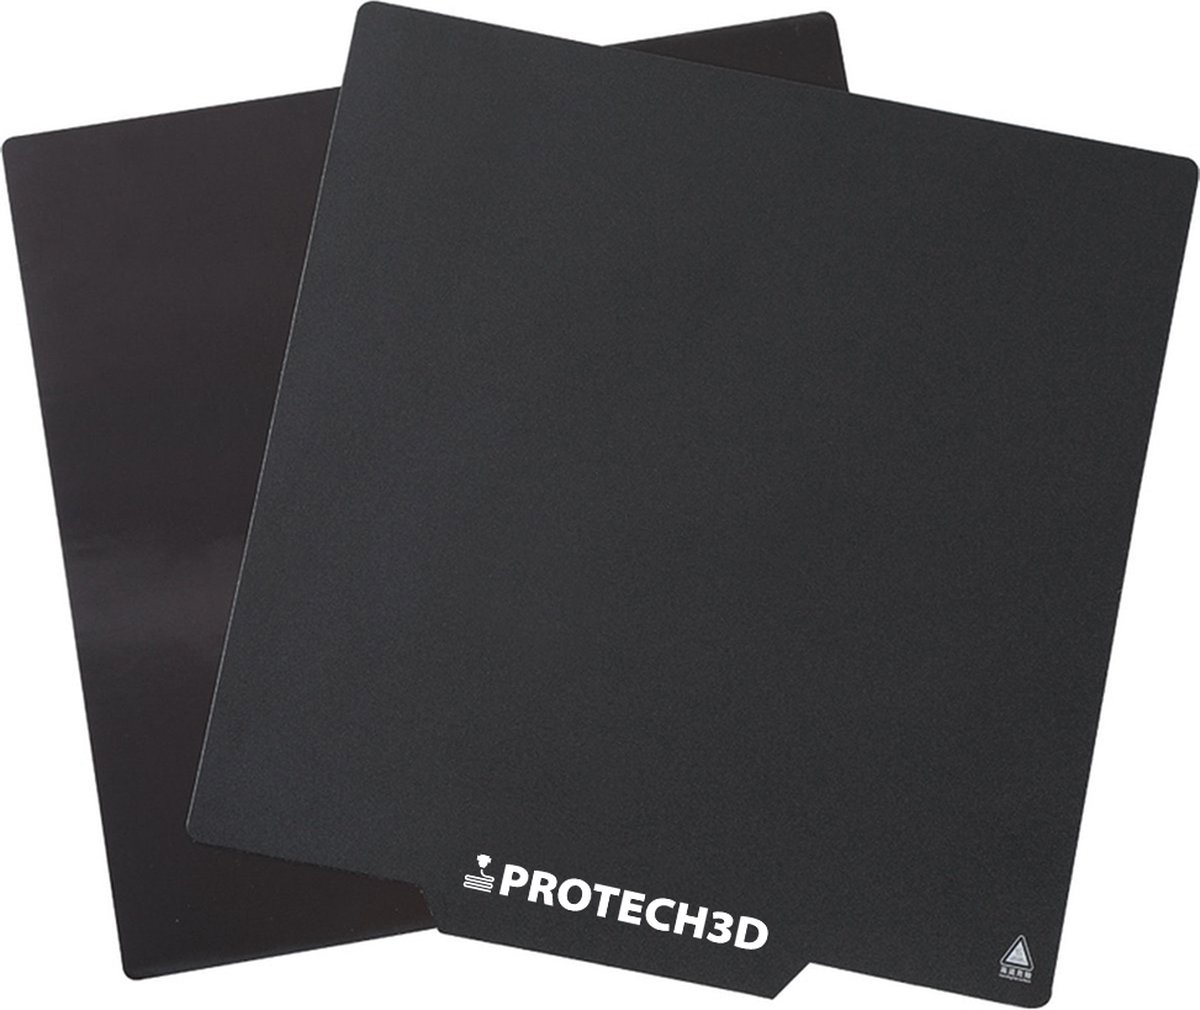 ProTech3D – Double Magnetic build surface 310x310mm